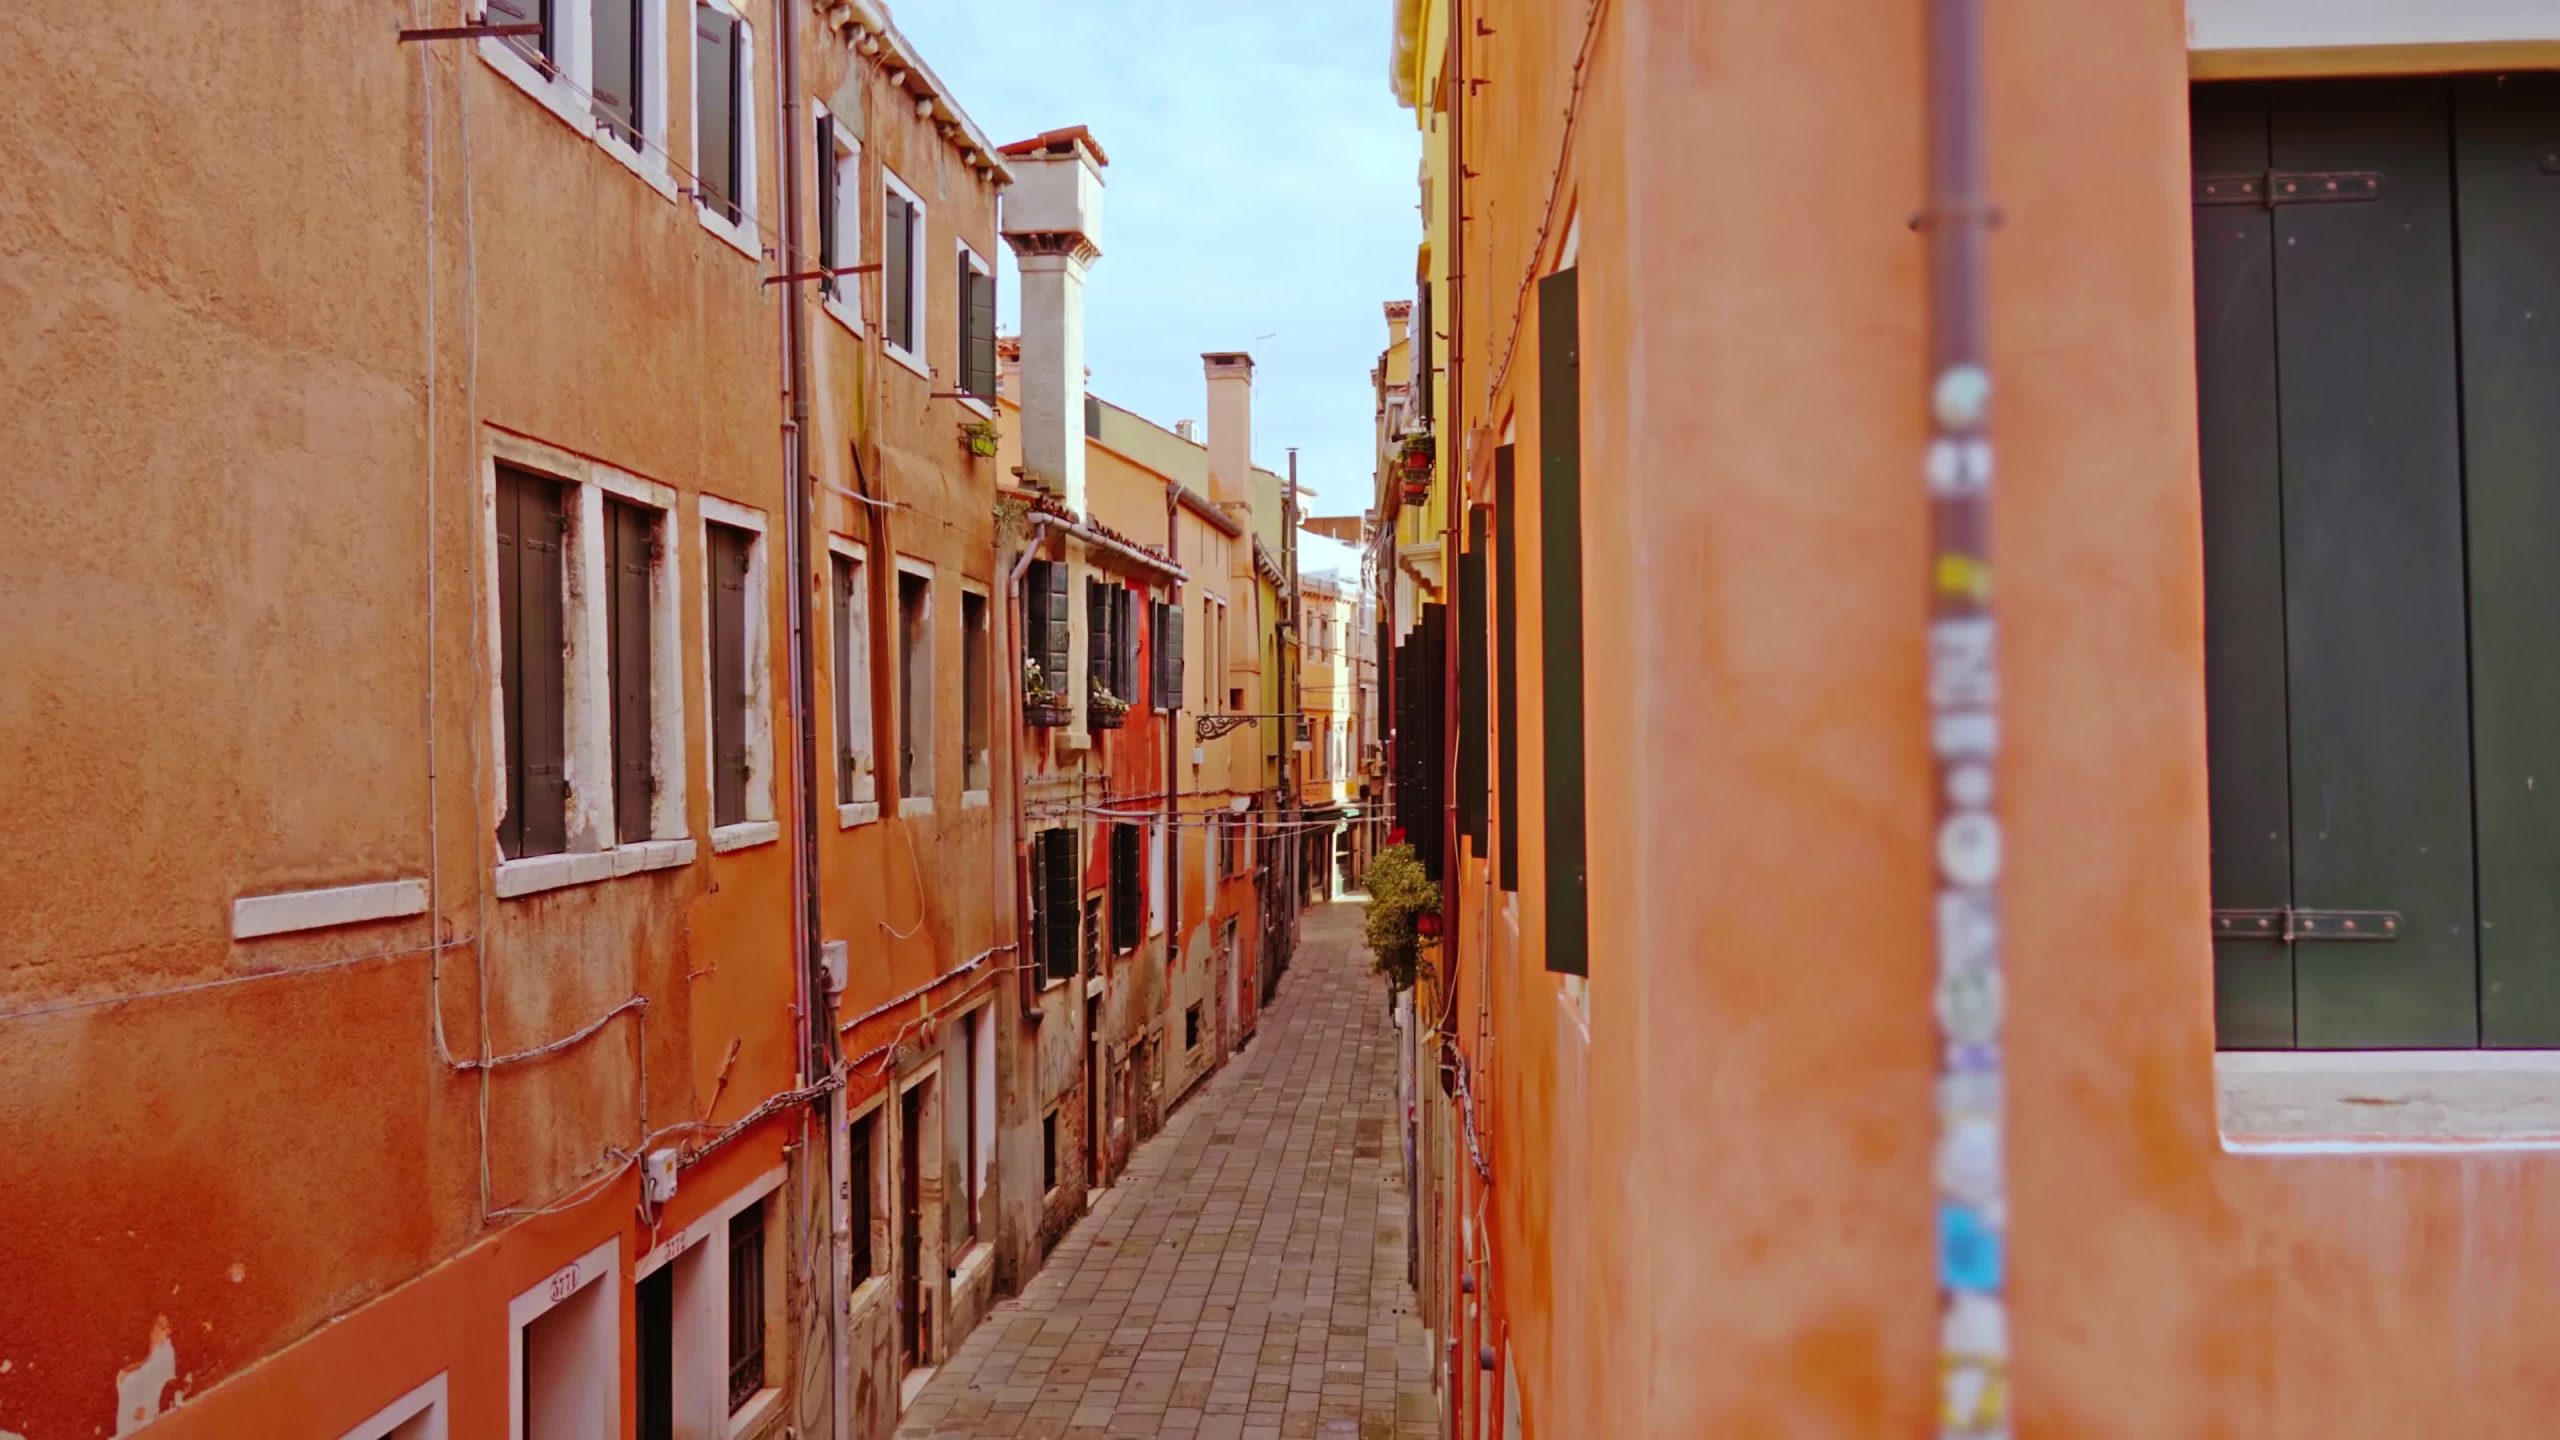 Calle vuota di Venezia atra case antiche